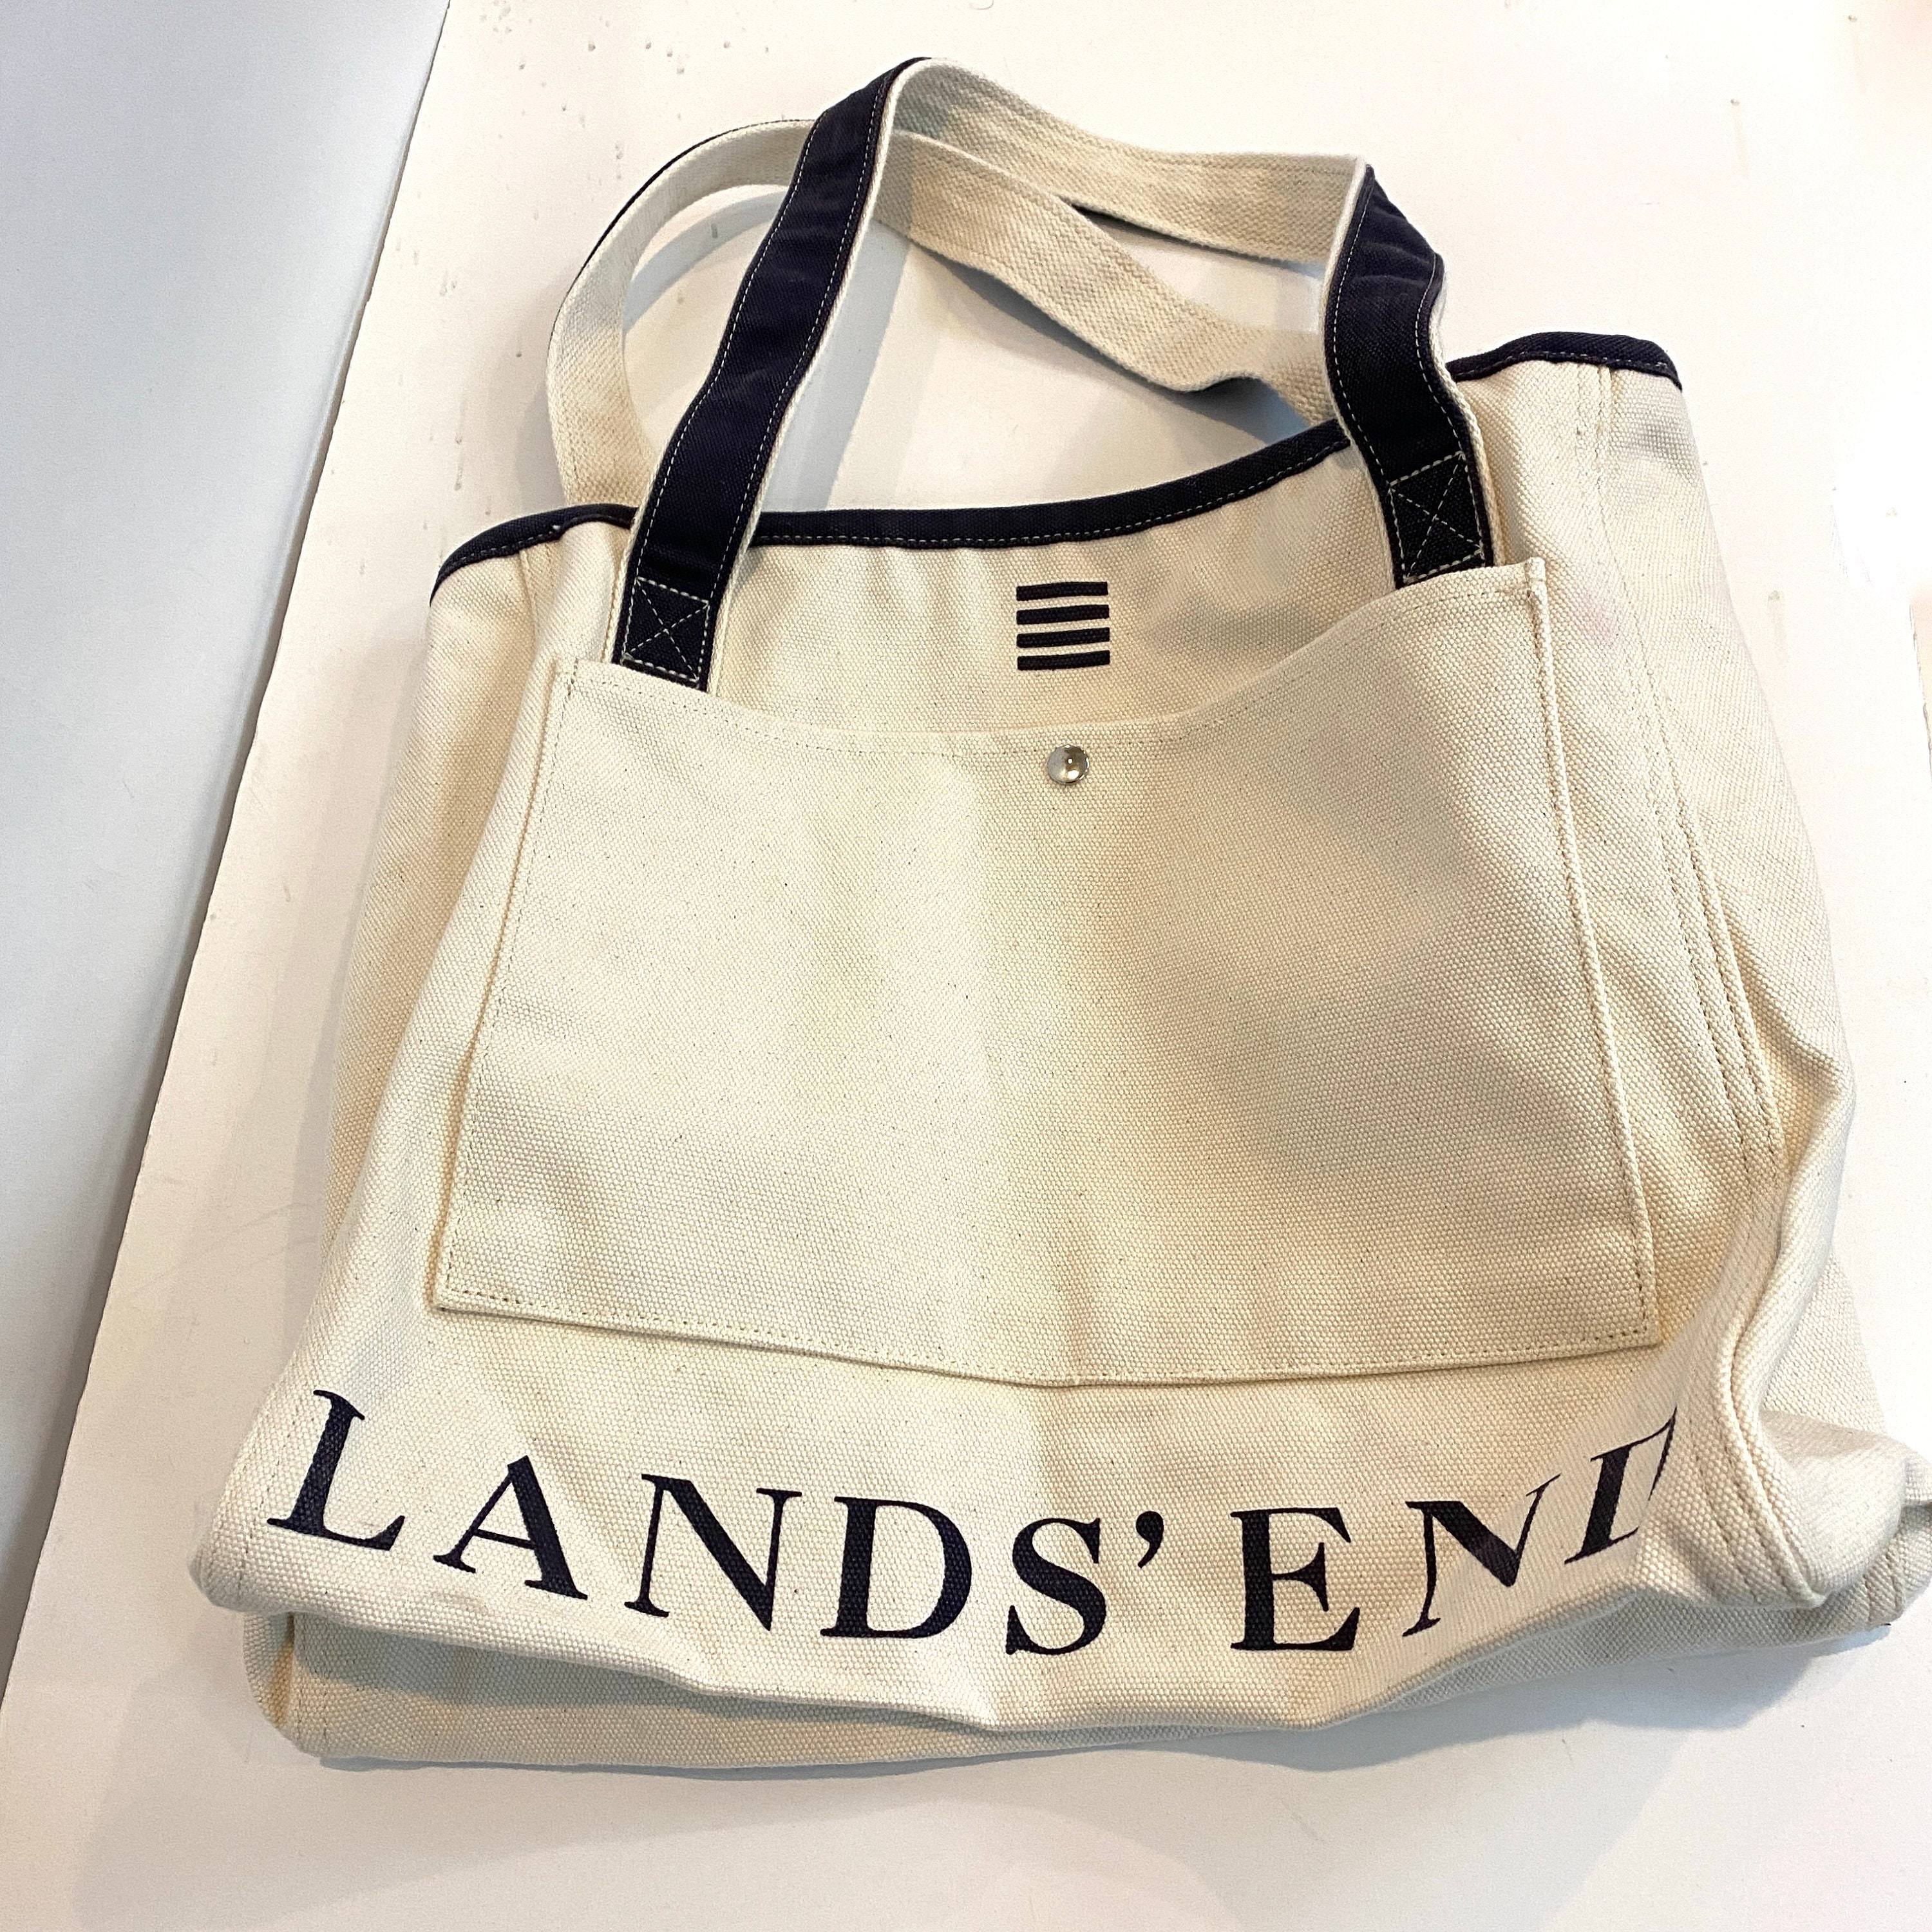 Lands' End Alumni Tote Bag (Canvas)